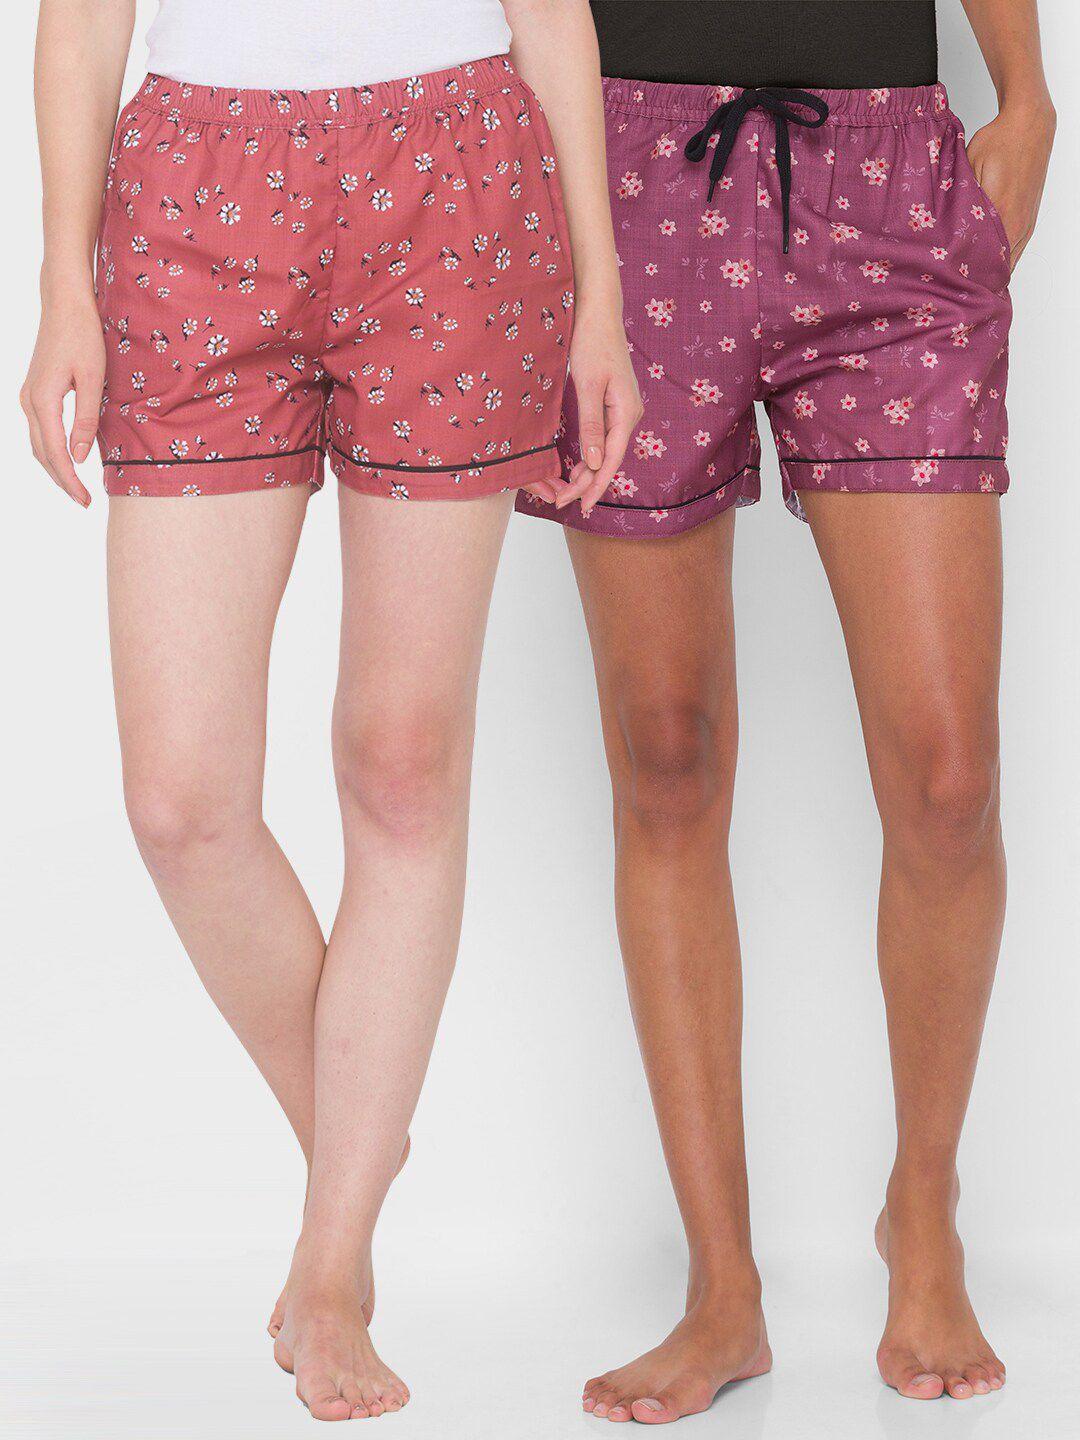 fashionrack-women-brown-&-purple-set-of-2-printed-lounge-shorts